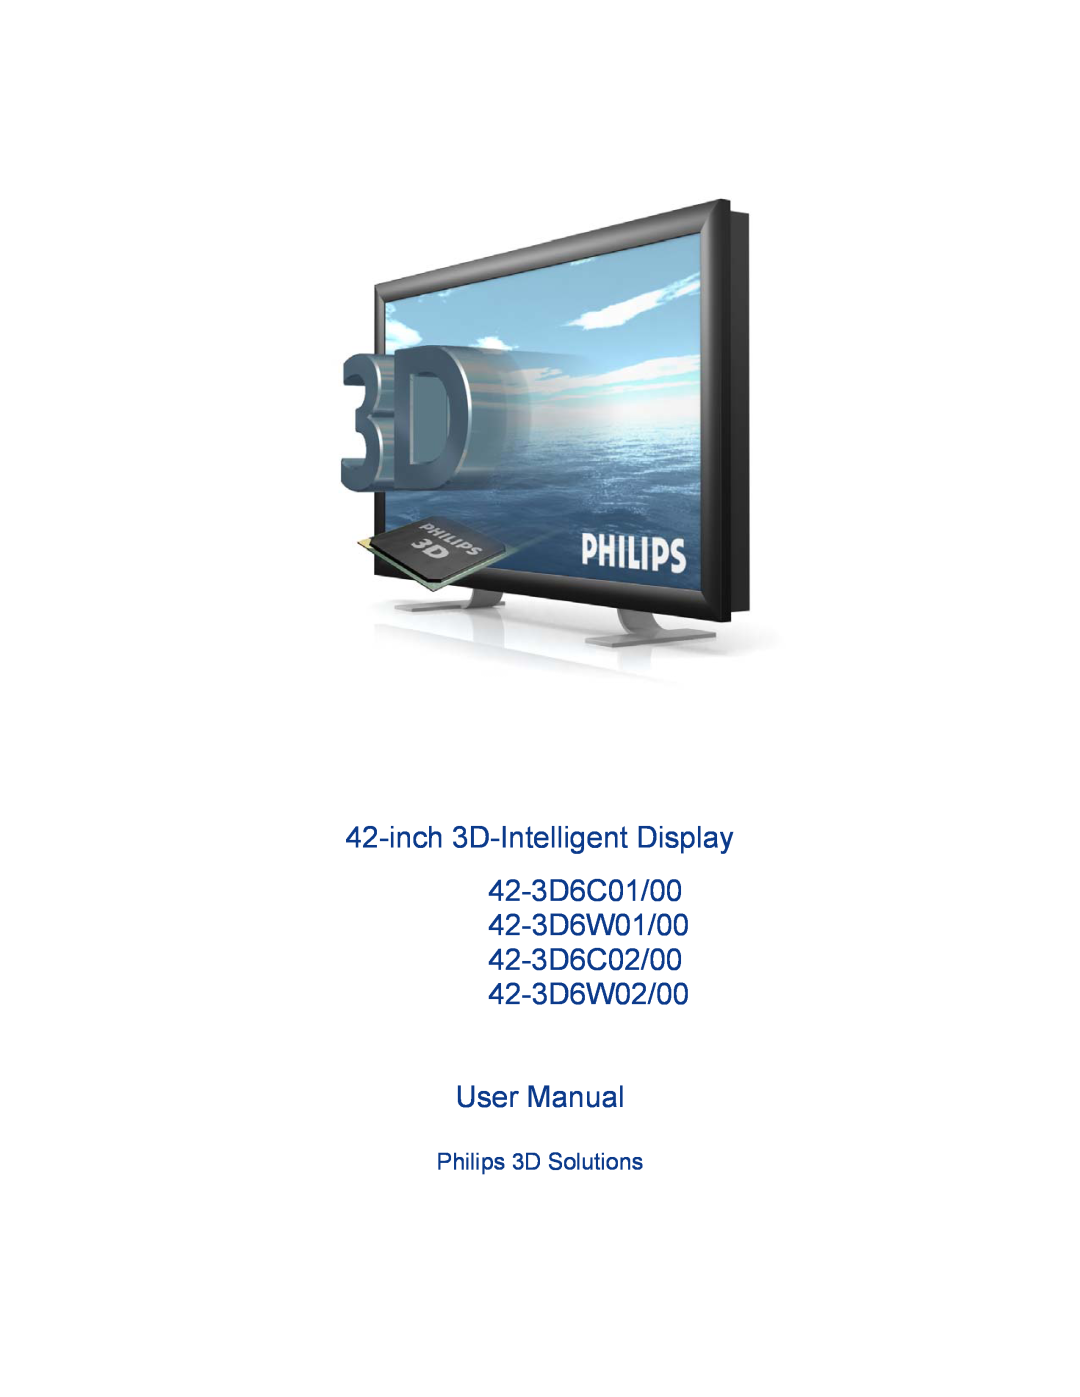 Philips user manual inch 3D-IntelligentDisplay, 42-3D6C01/00 42-3D6W01/00 42-3D6C02/00, Philips 3D Solutions 